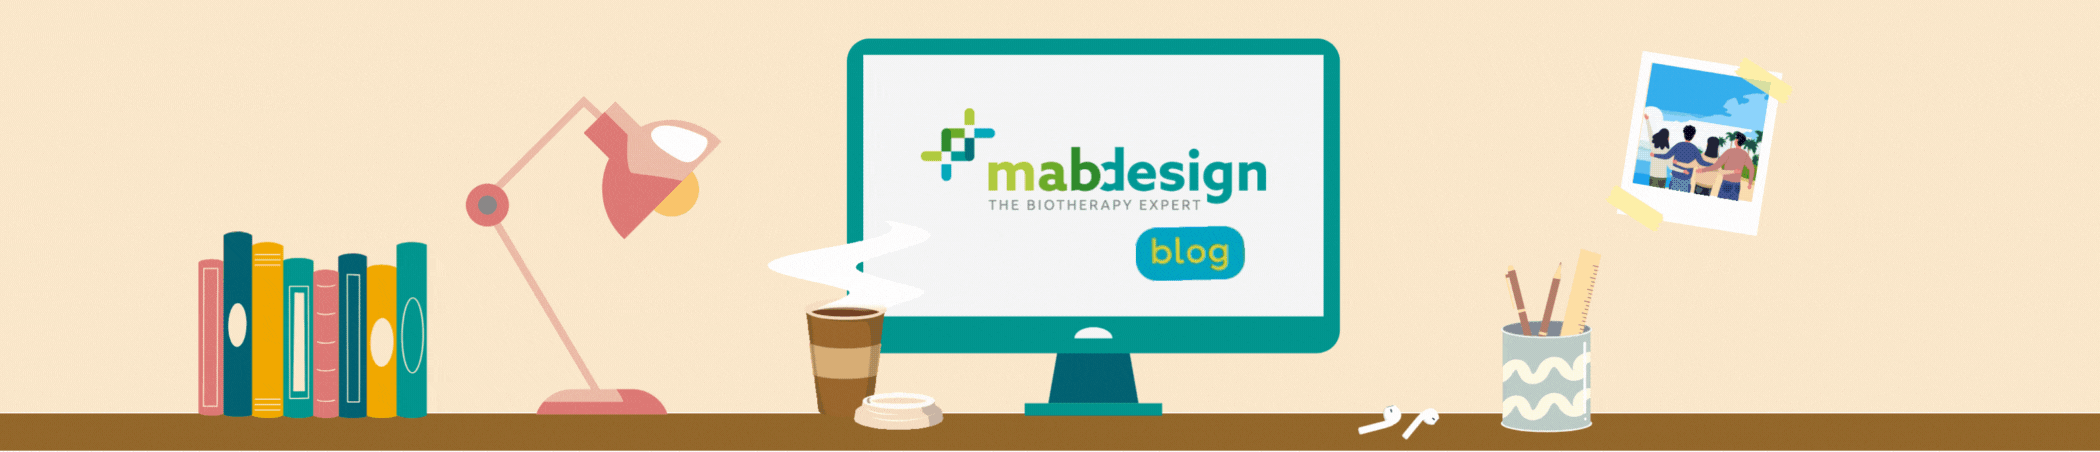 bio-hub, blog ; MabDesign ; articles ; expertise ; pipeline ; données marché